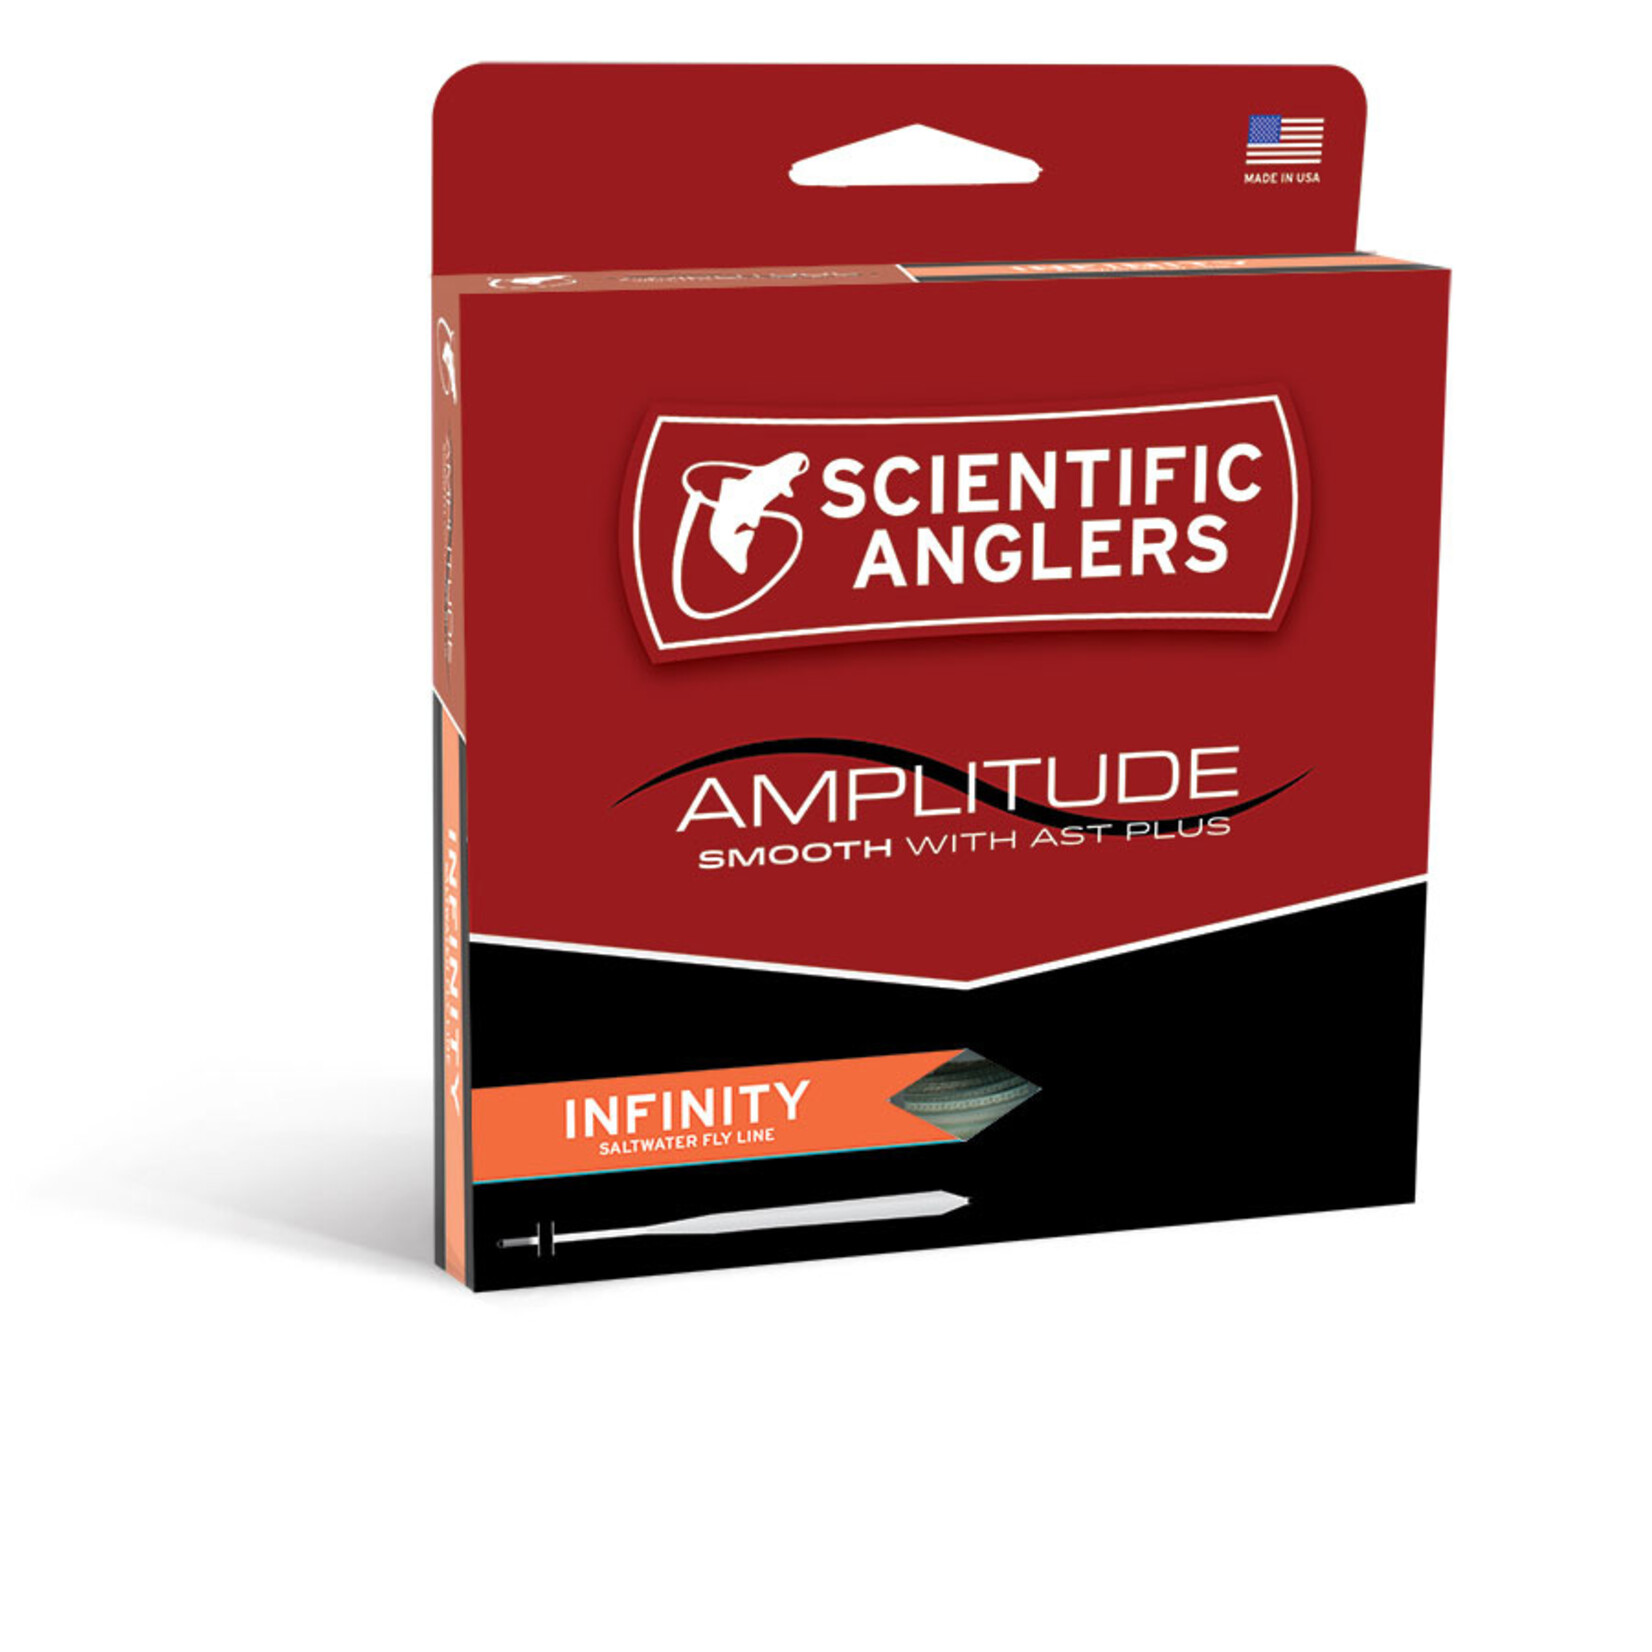 Scientific Anglers Scientific Anglers Amplitude Smooth Infinity Salt